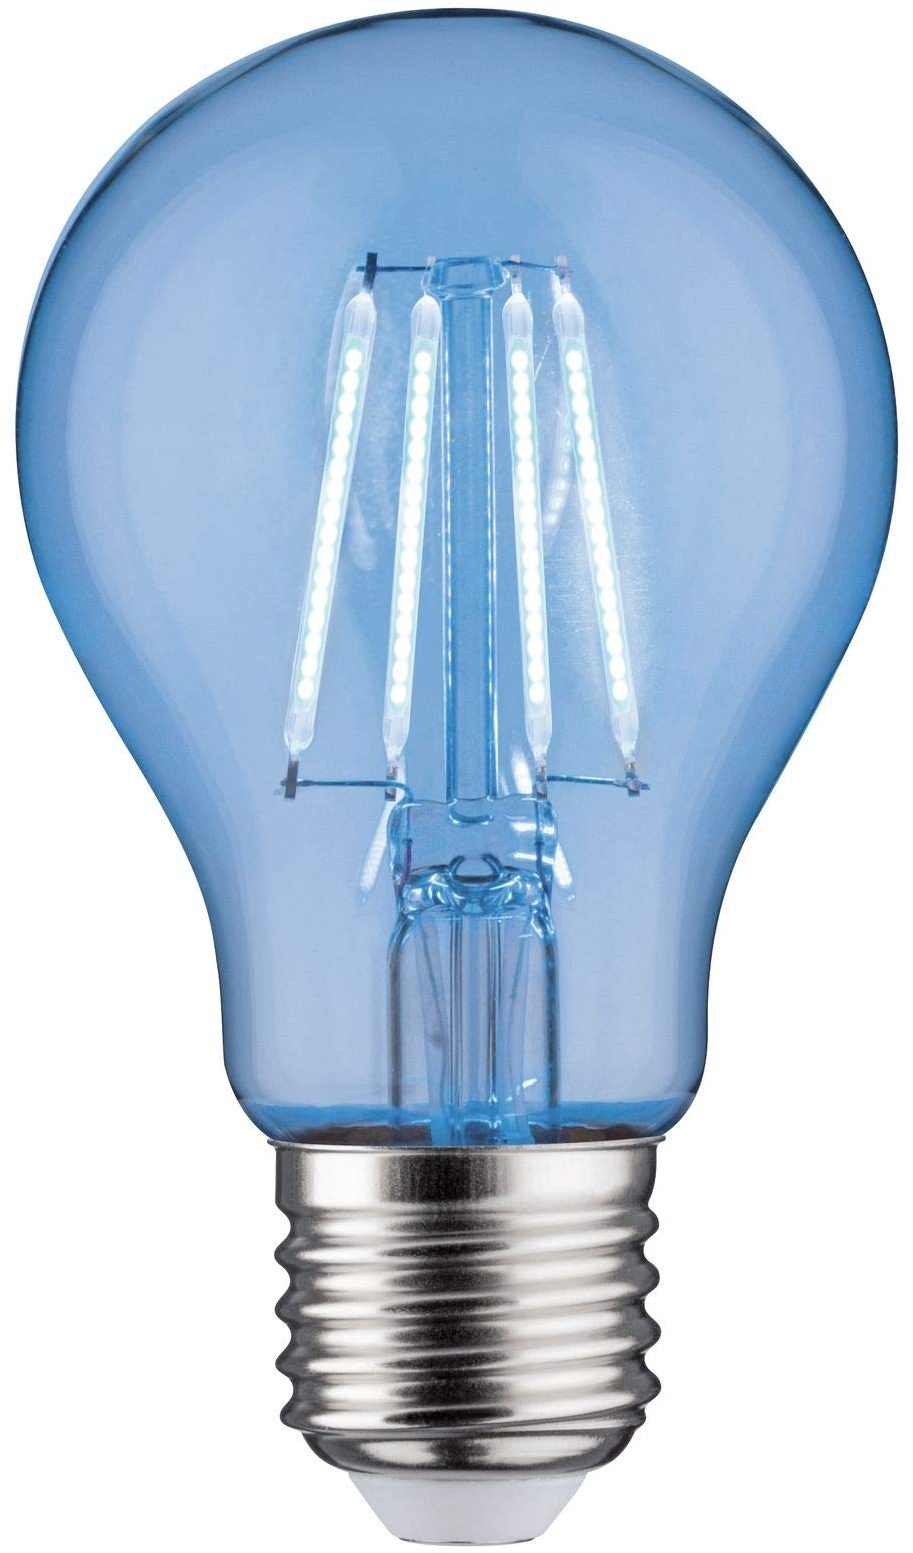 Paulmann 28721 LED Lampe Standardform 2,2W Leuchtmittel Blau Beleuchtung Glas Licht 1000K E27